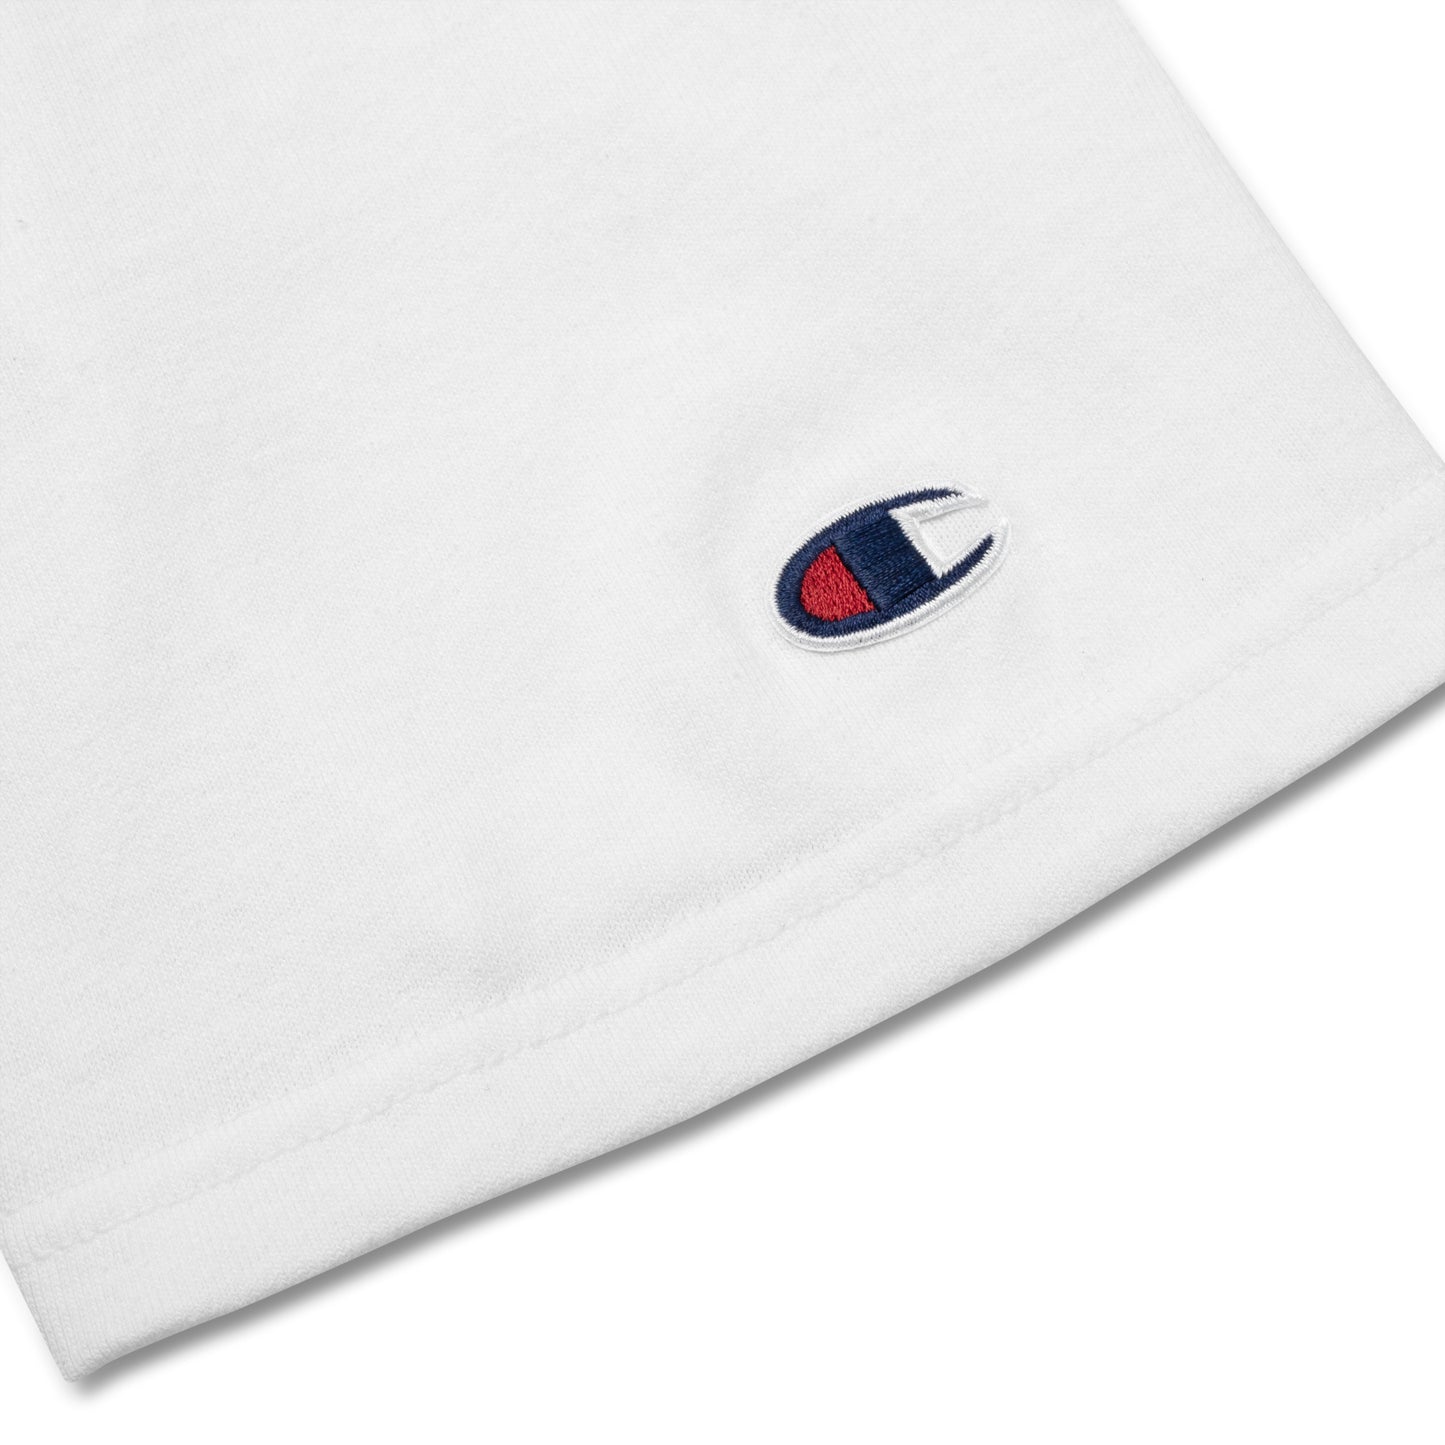 Airborne Logo Men's Champion T-Shirt